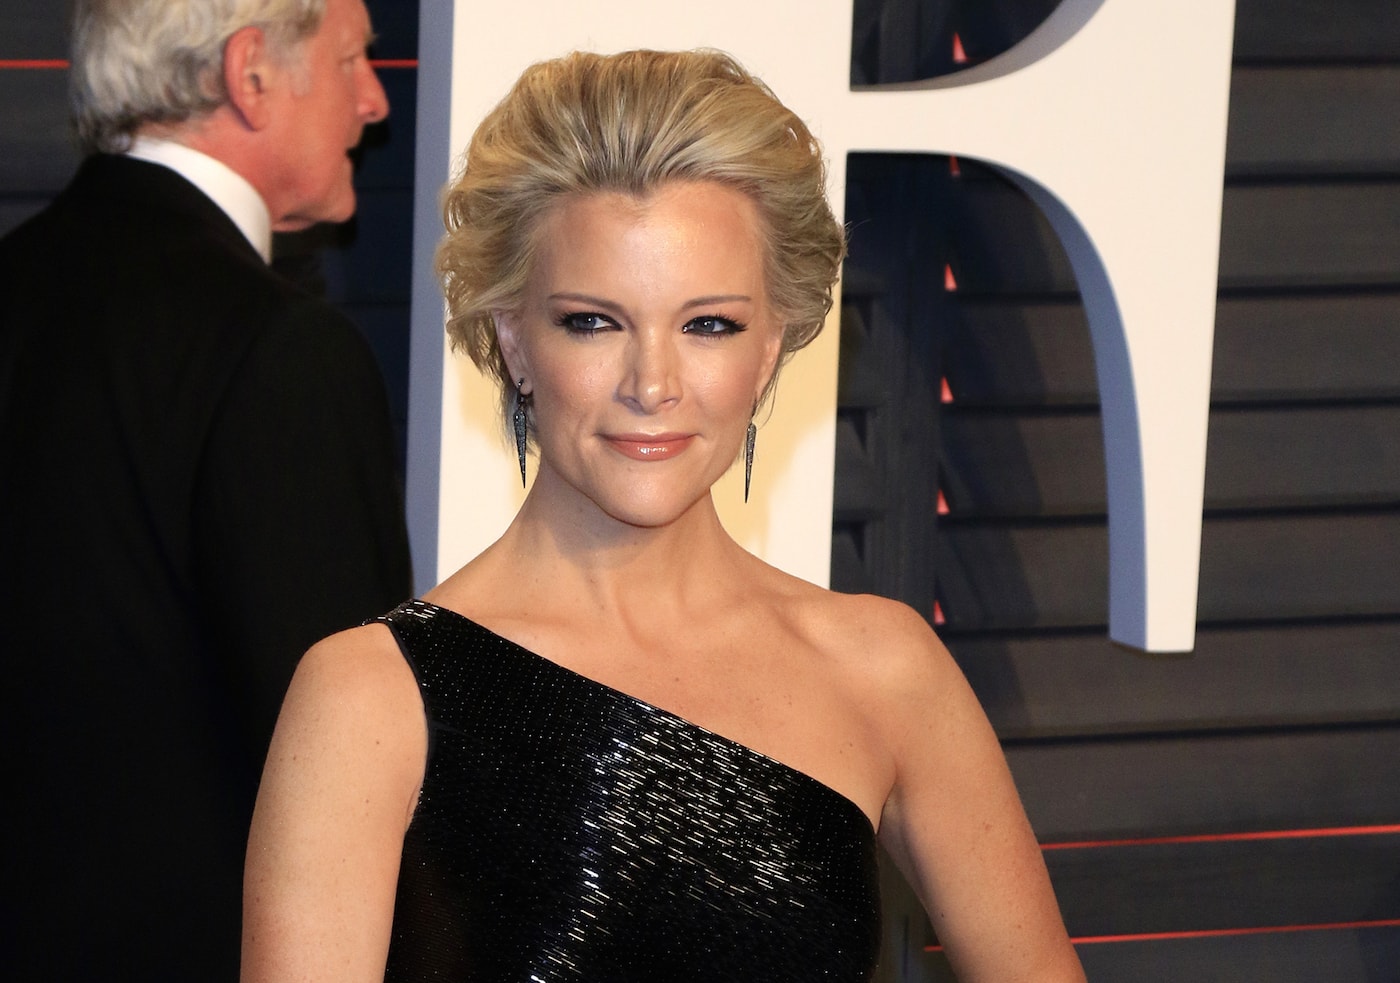 Megyn Kelly Fires Back At Jane Fonda Over Plastic Surgery